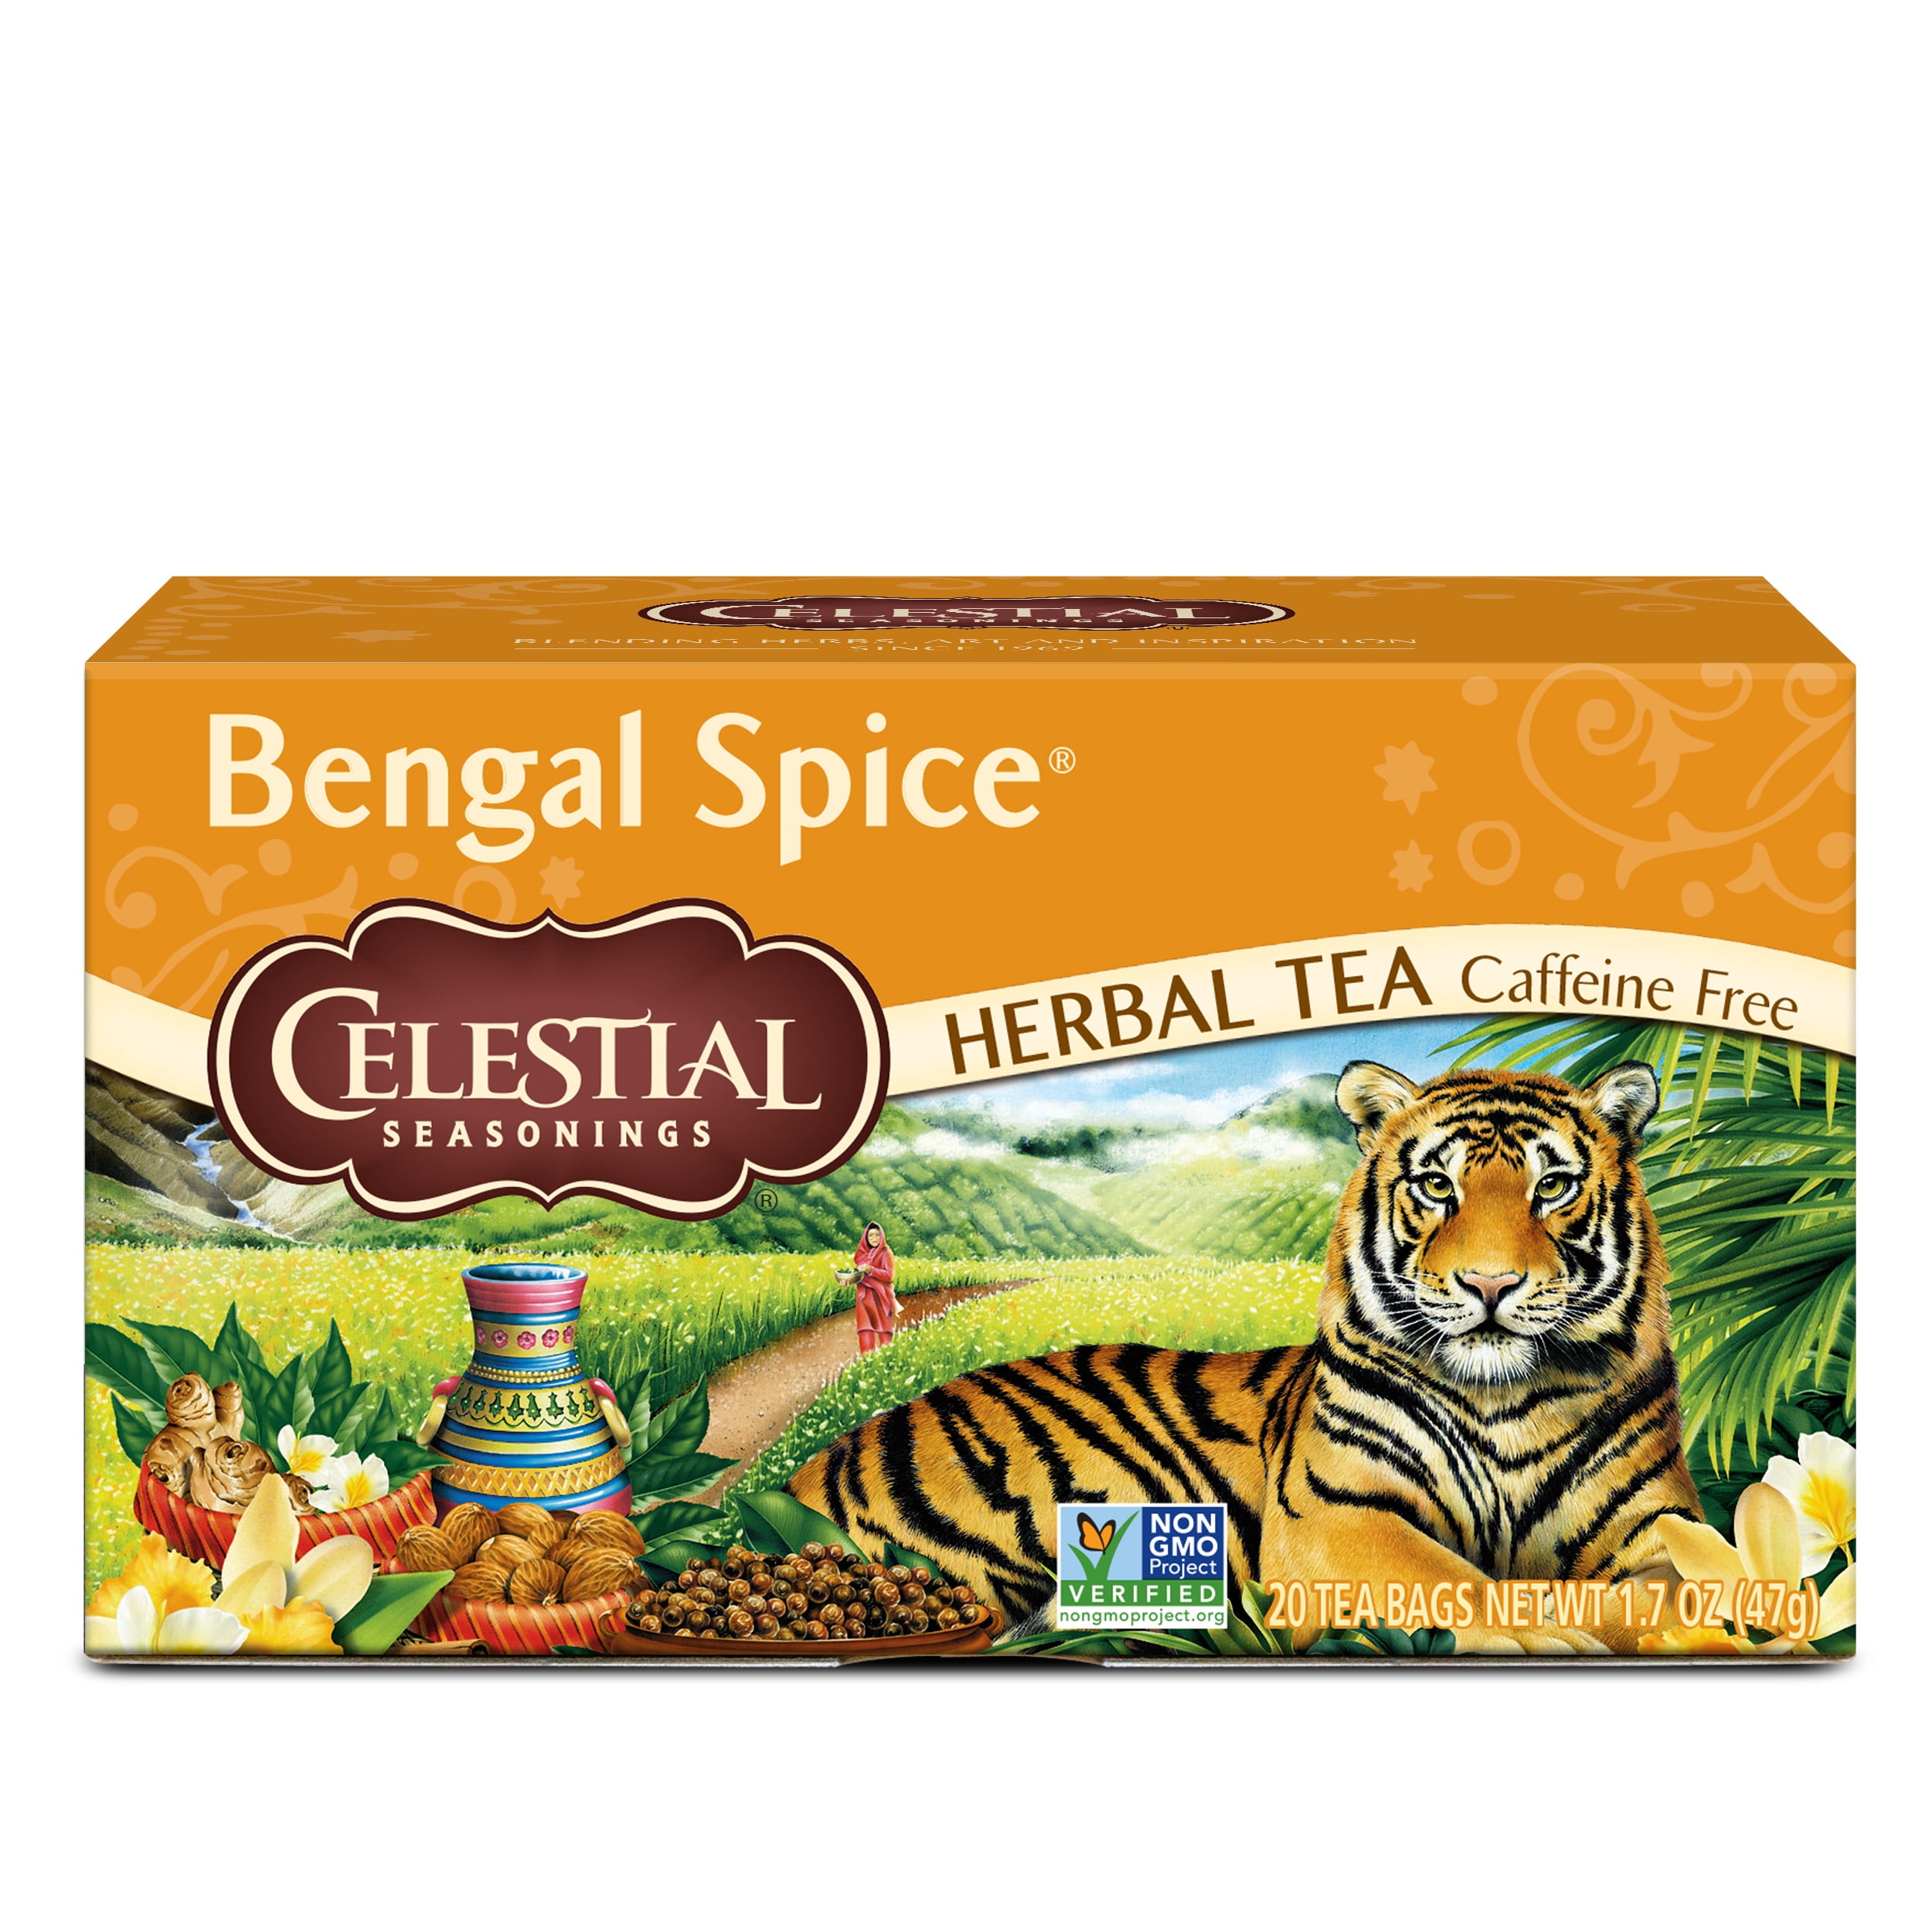 Celestial Seasonings - Herbal Tea Caffeine Free Bengal Spice - 20 Tea Bags